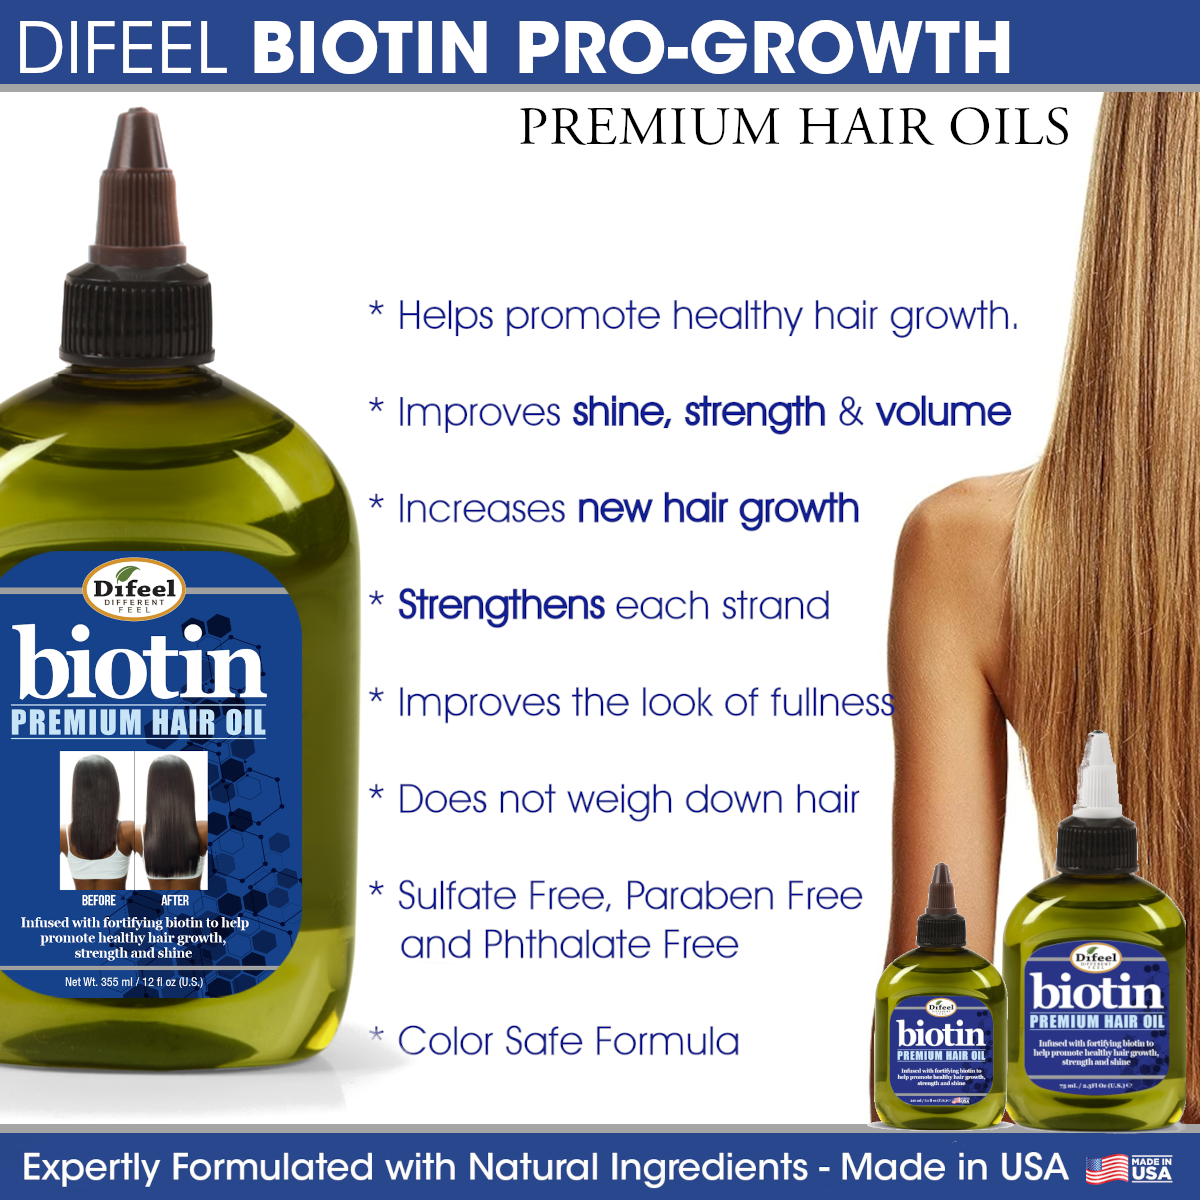 Difeel Biotin Premium Hair Oil 7.1 oz.